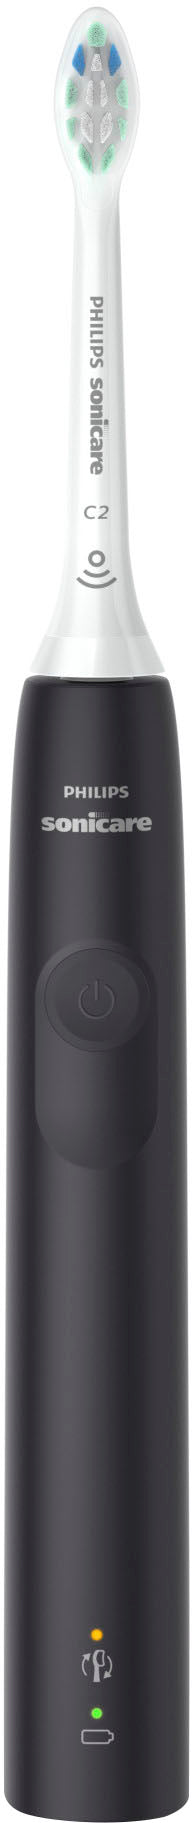 Philips Sonicare 4100 Power Toothbrush - Black_1